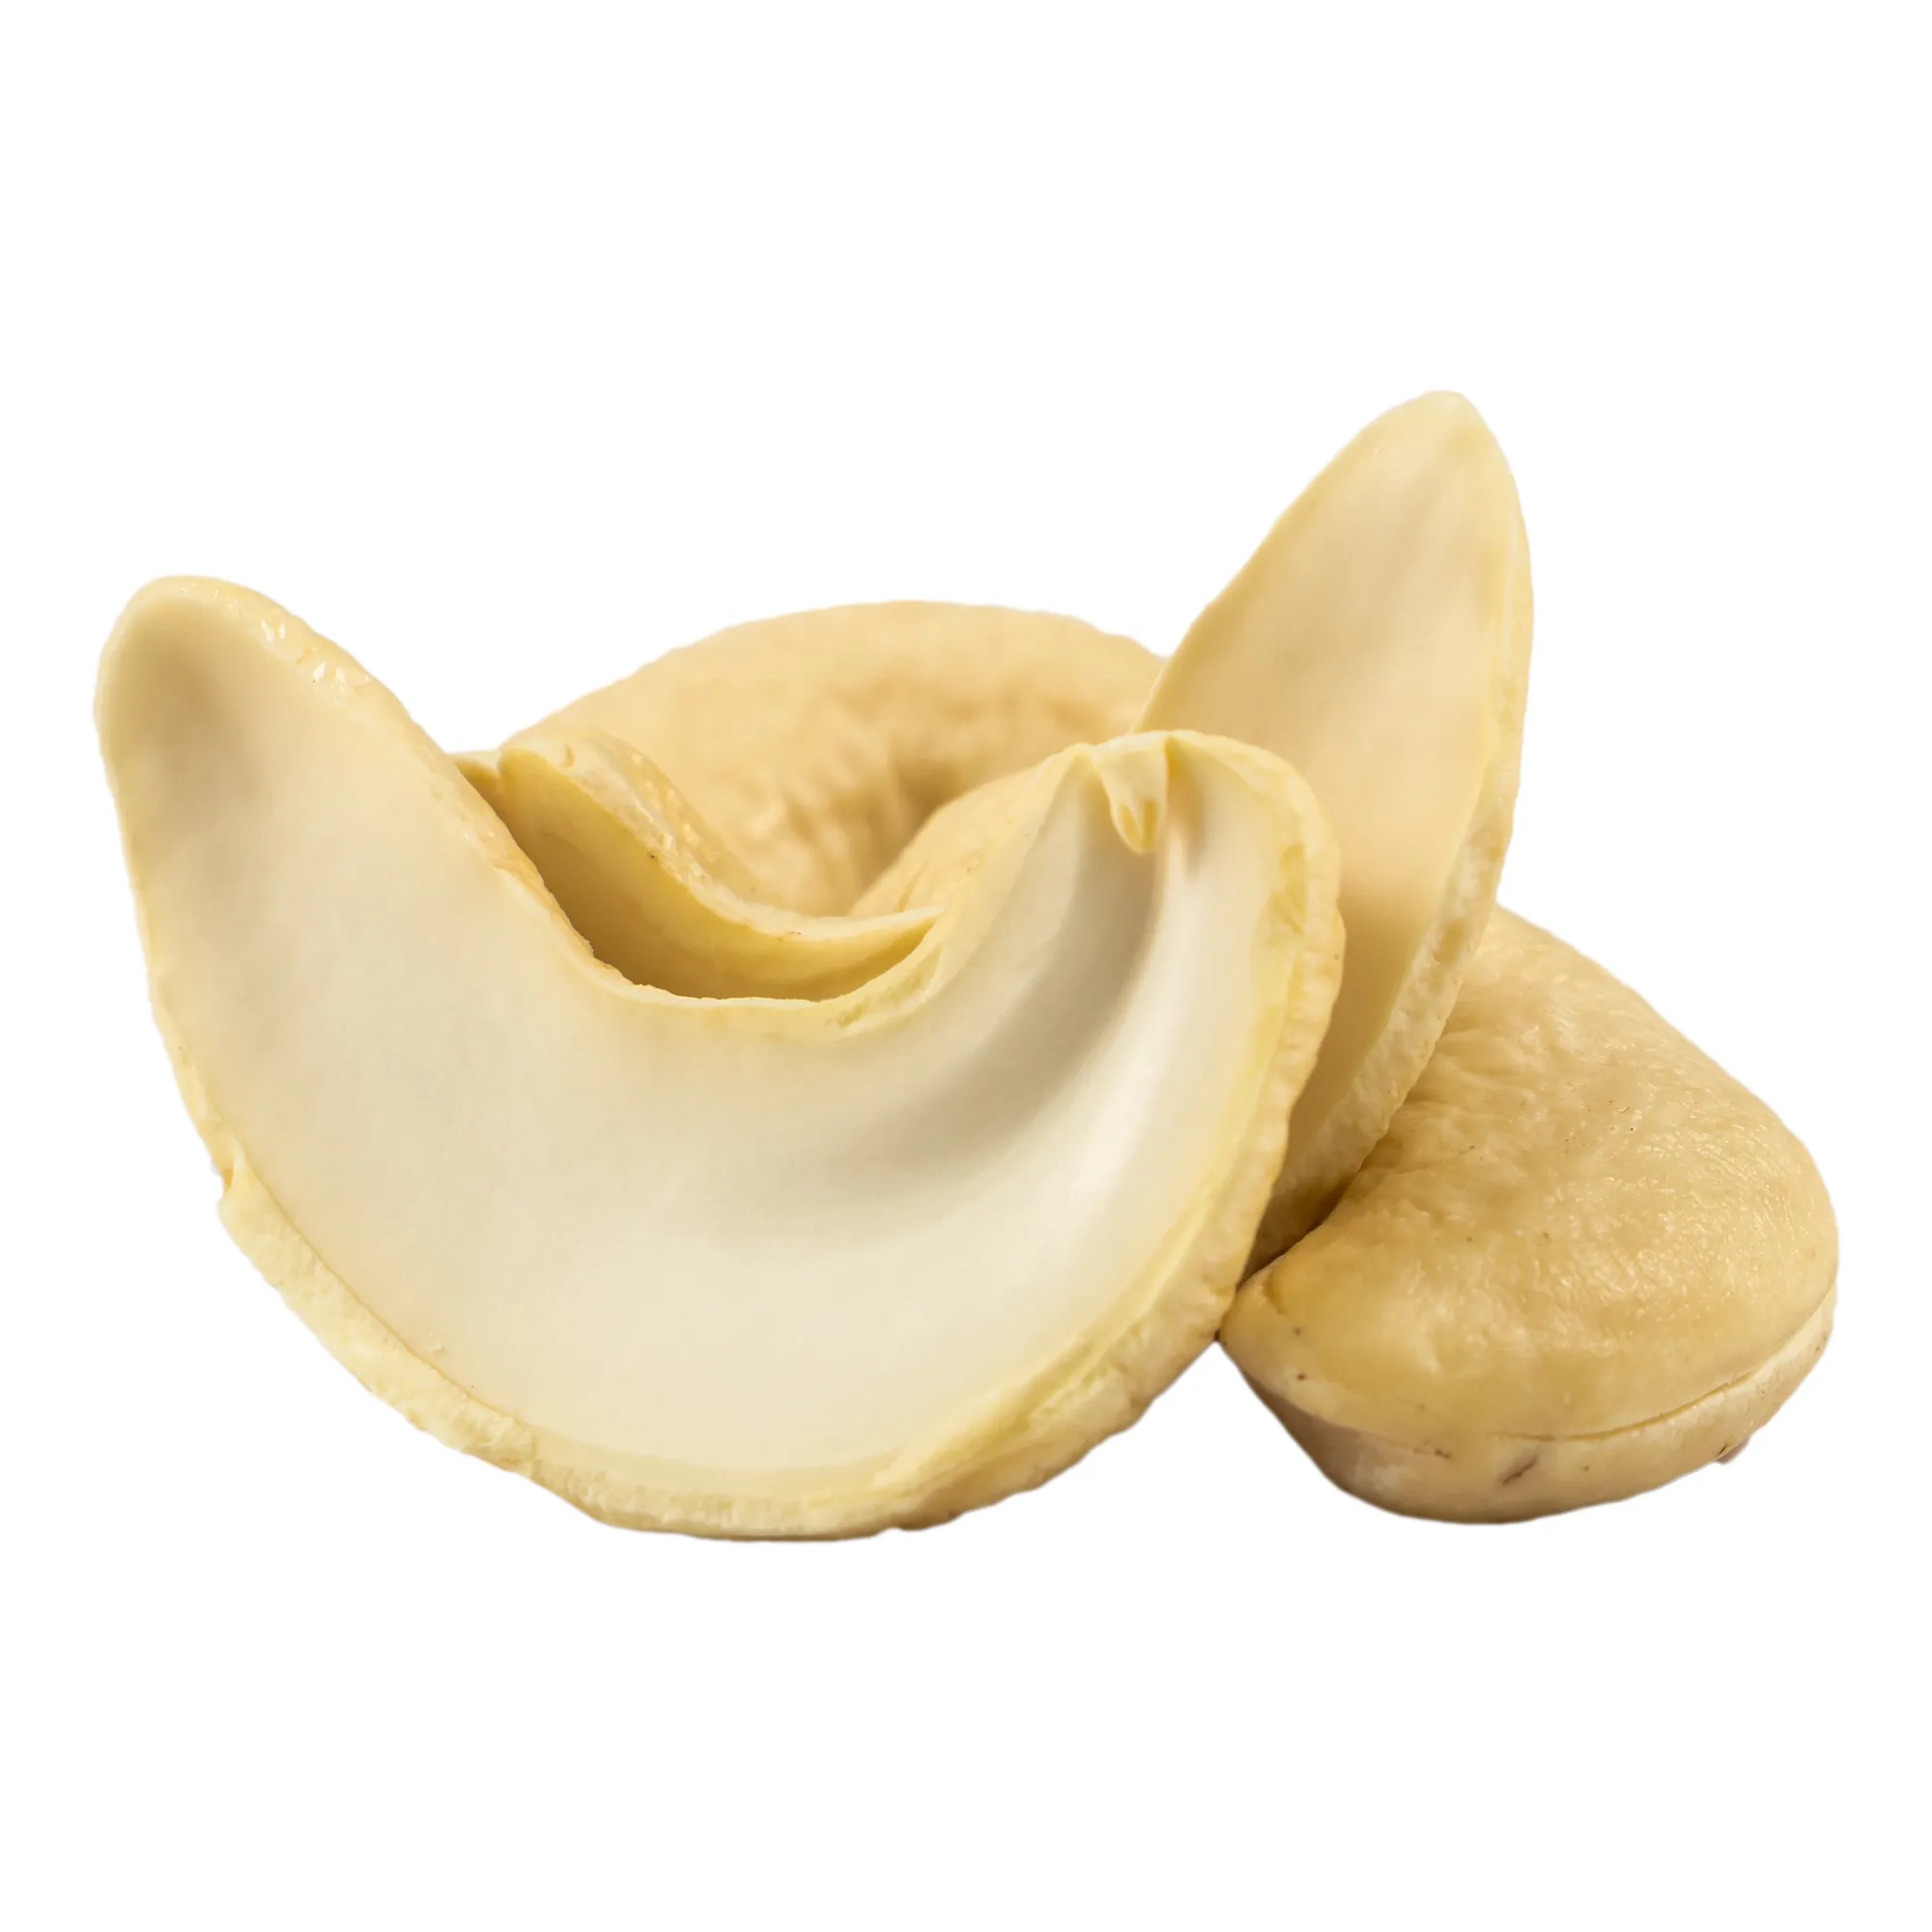 Buy the latest types of cashew price per ton 2023